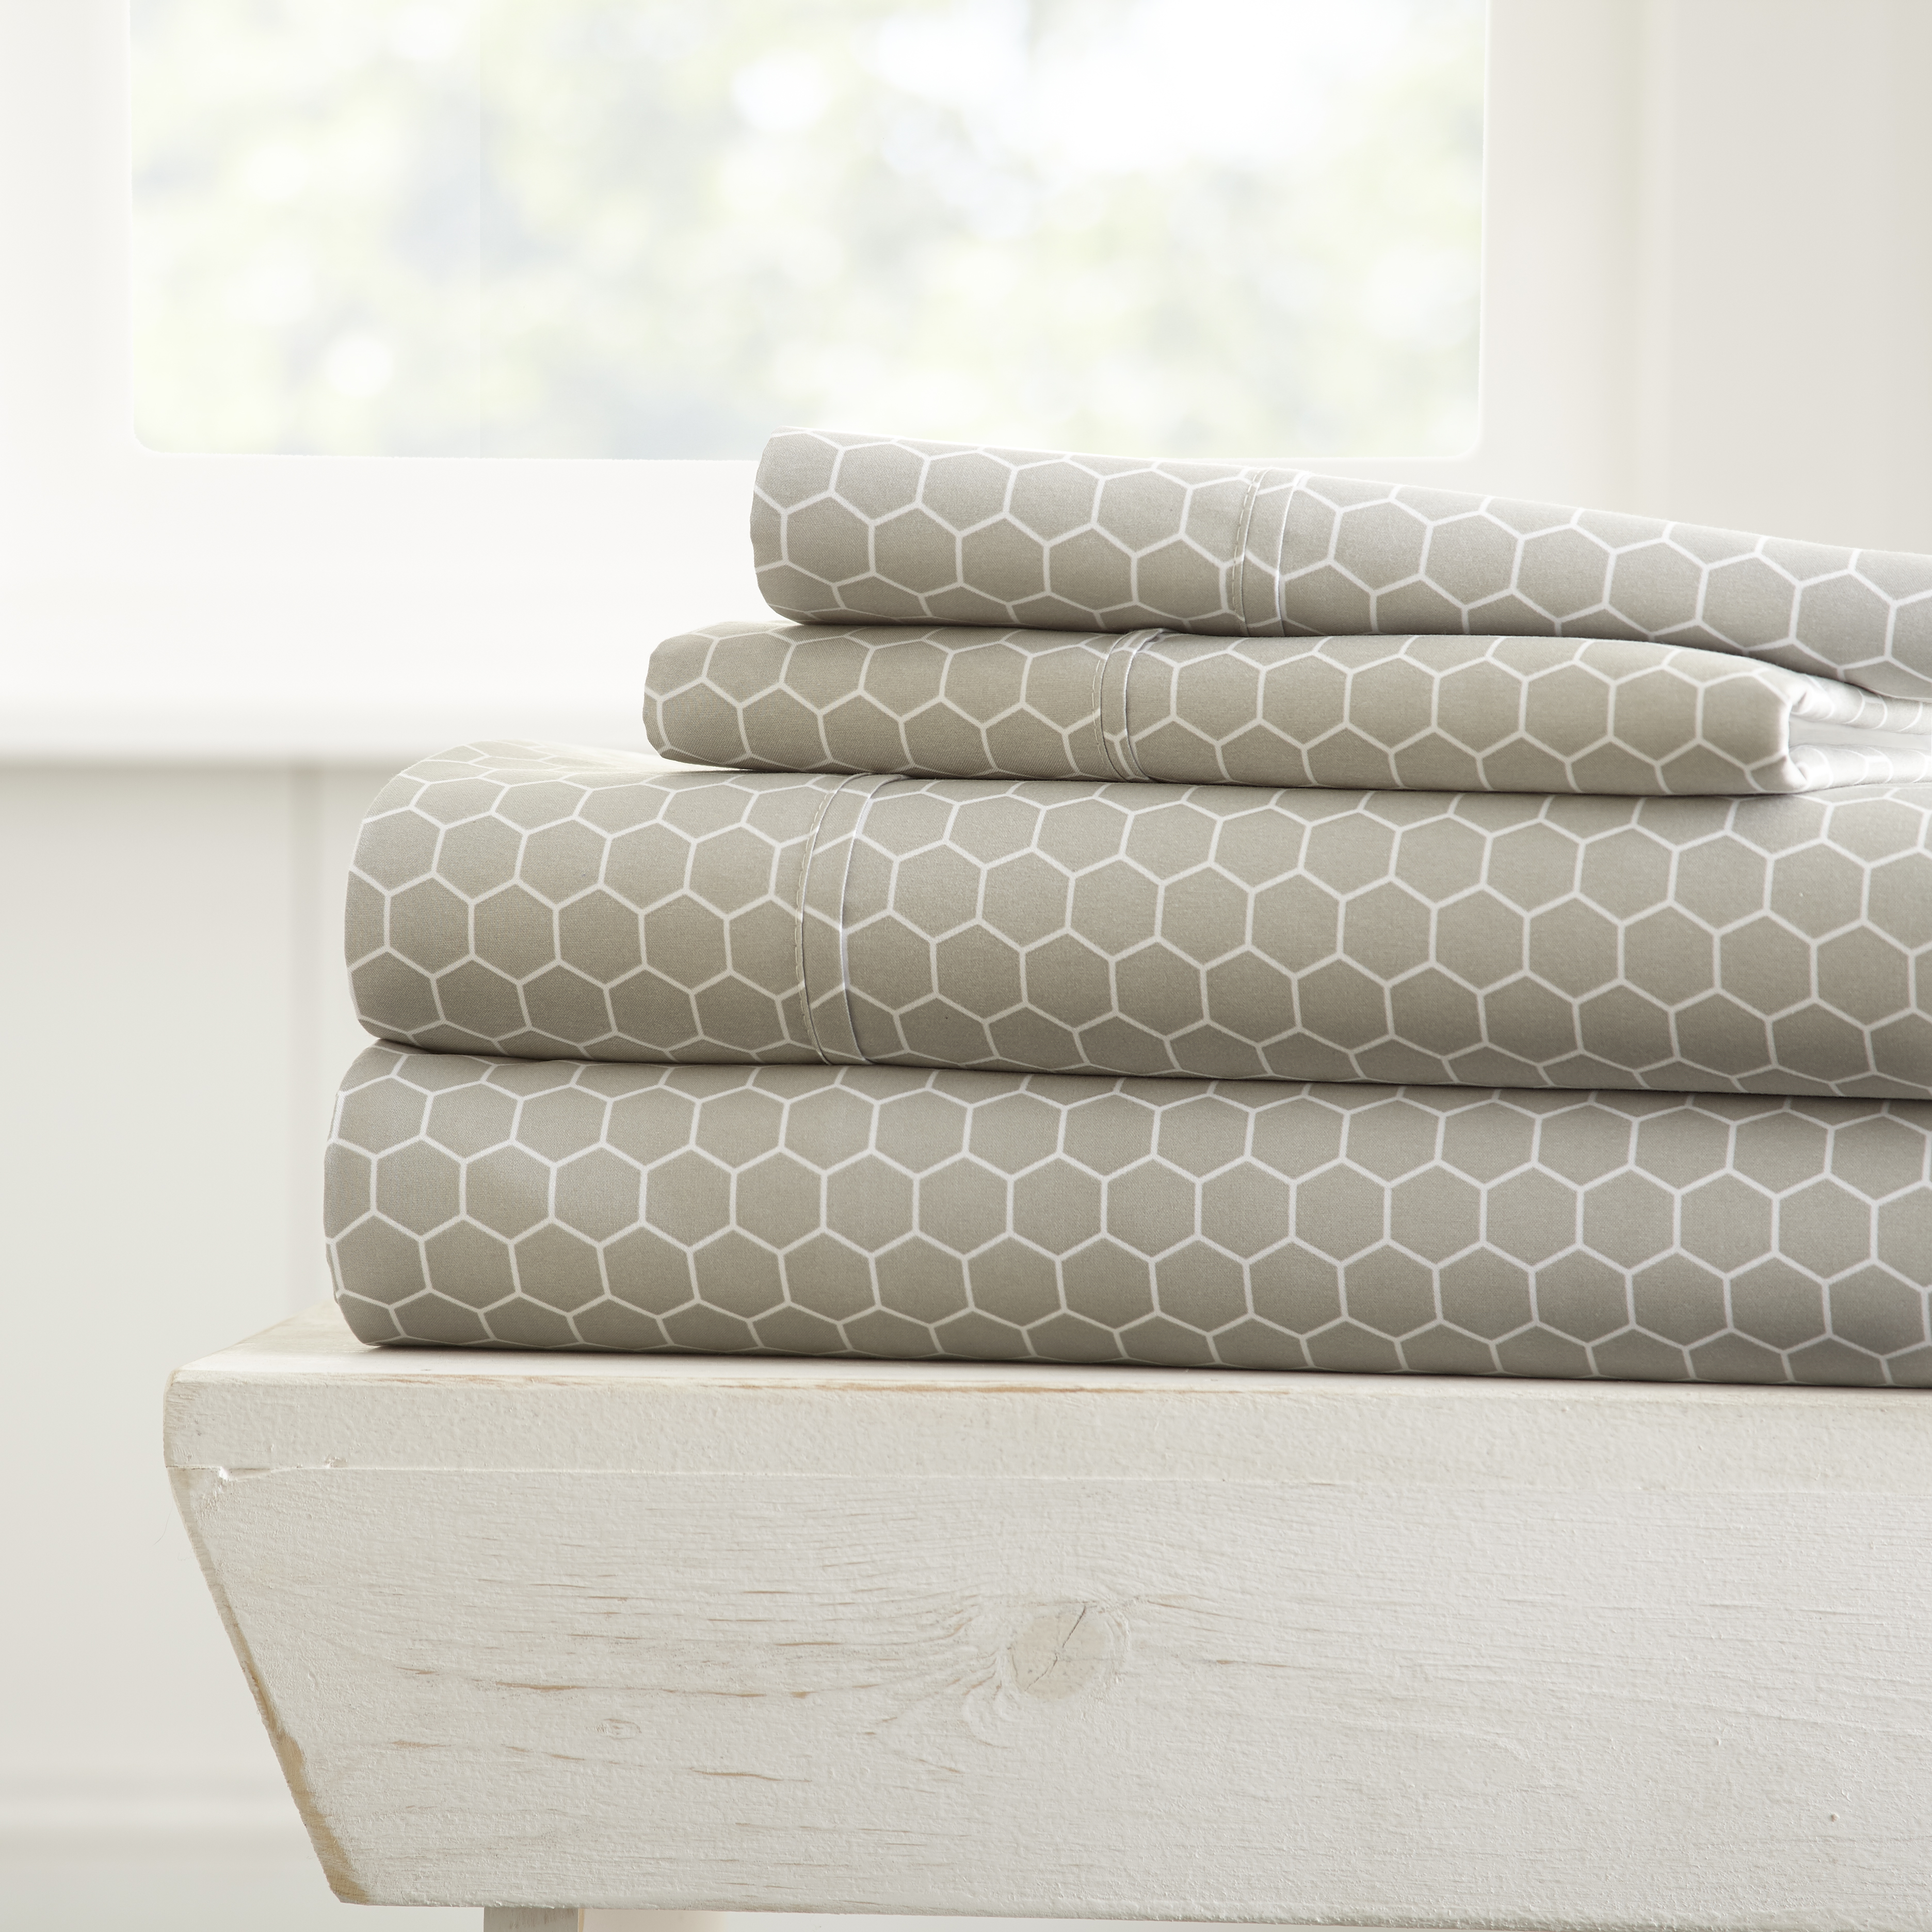 ienjoy Home Premium Ultra Soft Honeycomb Pattern 4 Piece Bed Sheet Set